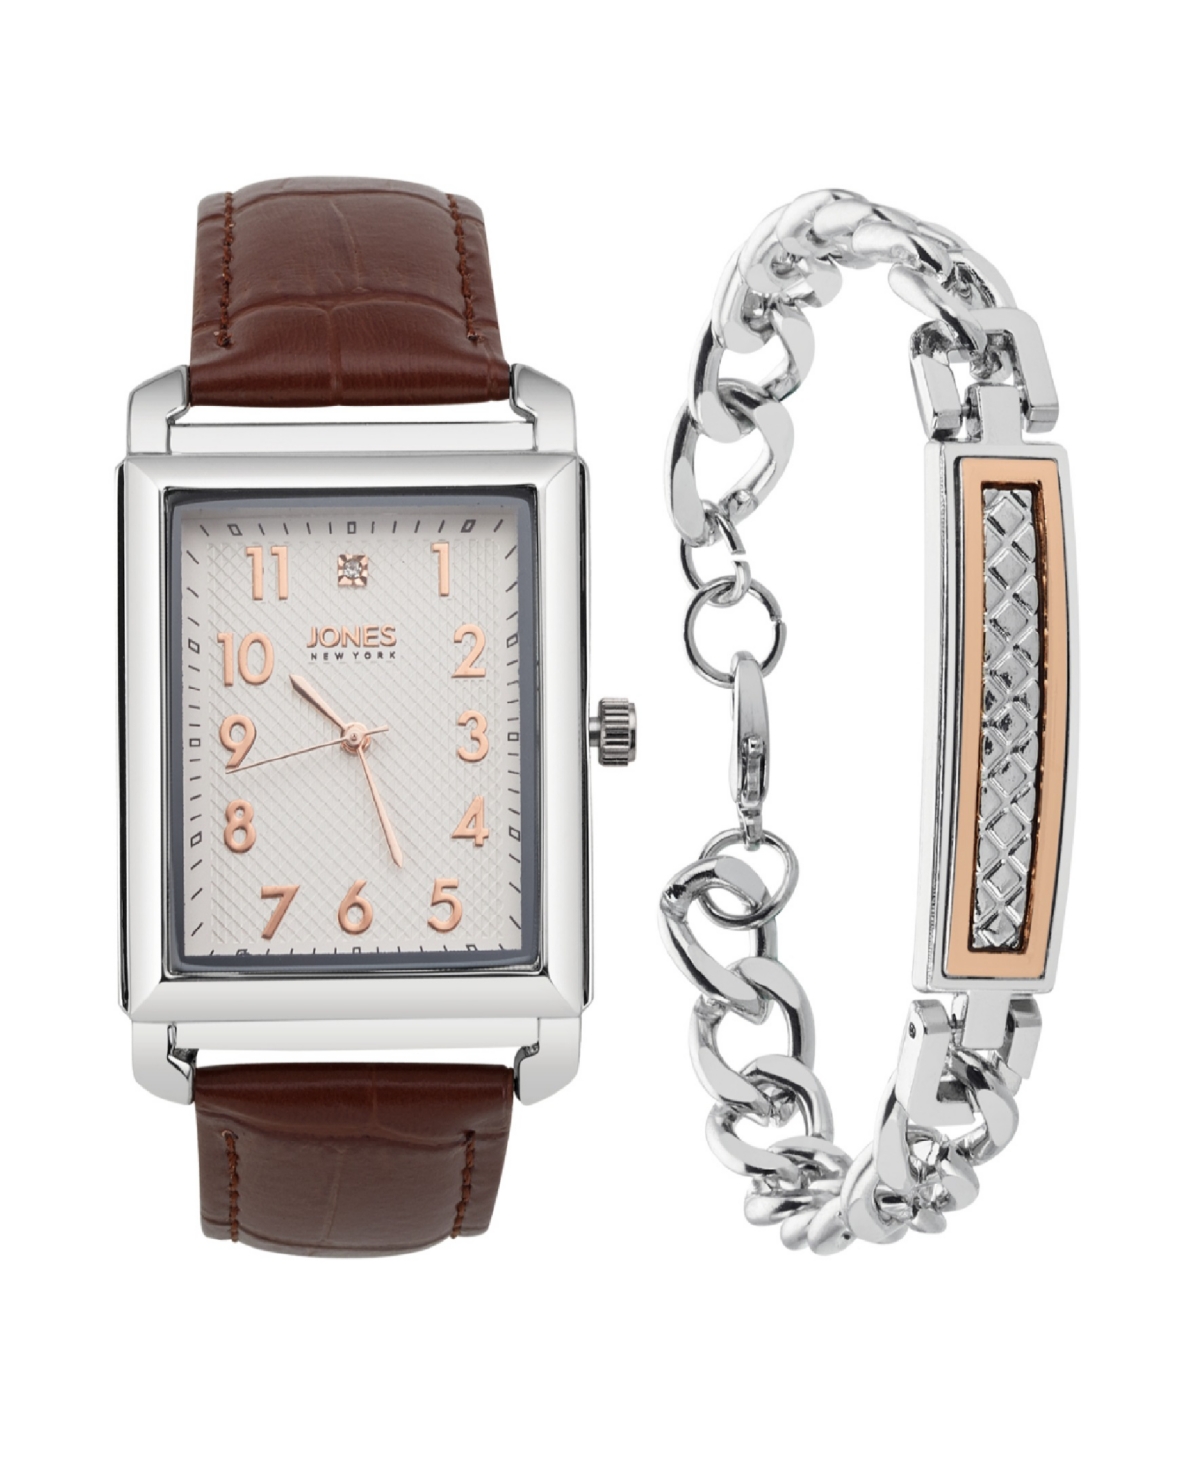 Jones New York Men's Analog Brown Croc Leather Strap Watch 33mm Bracelet Gift Set In Silver,brown